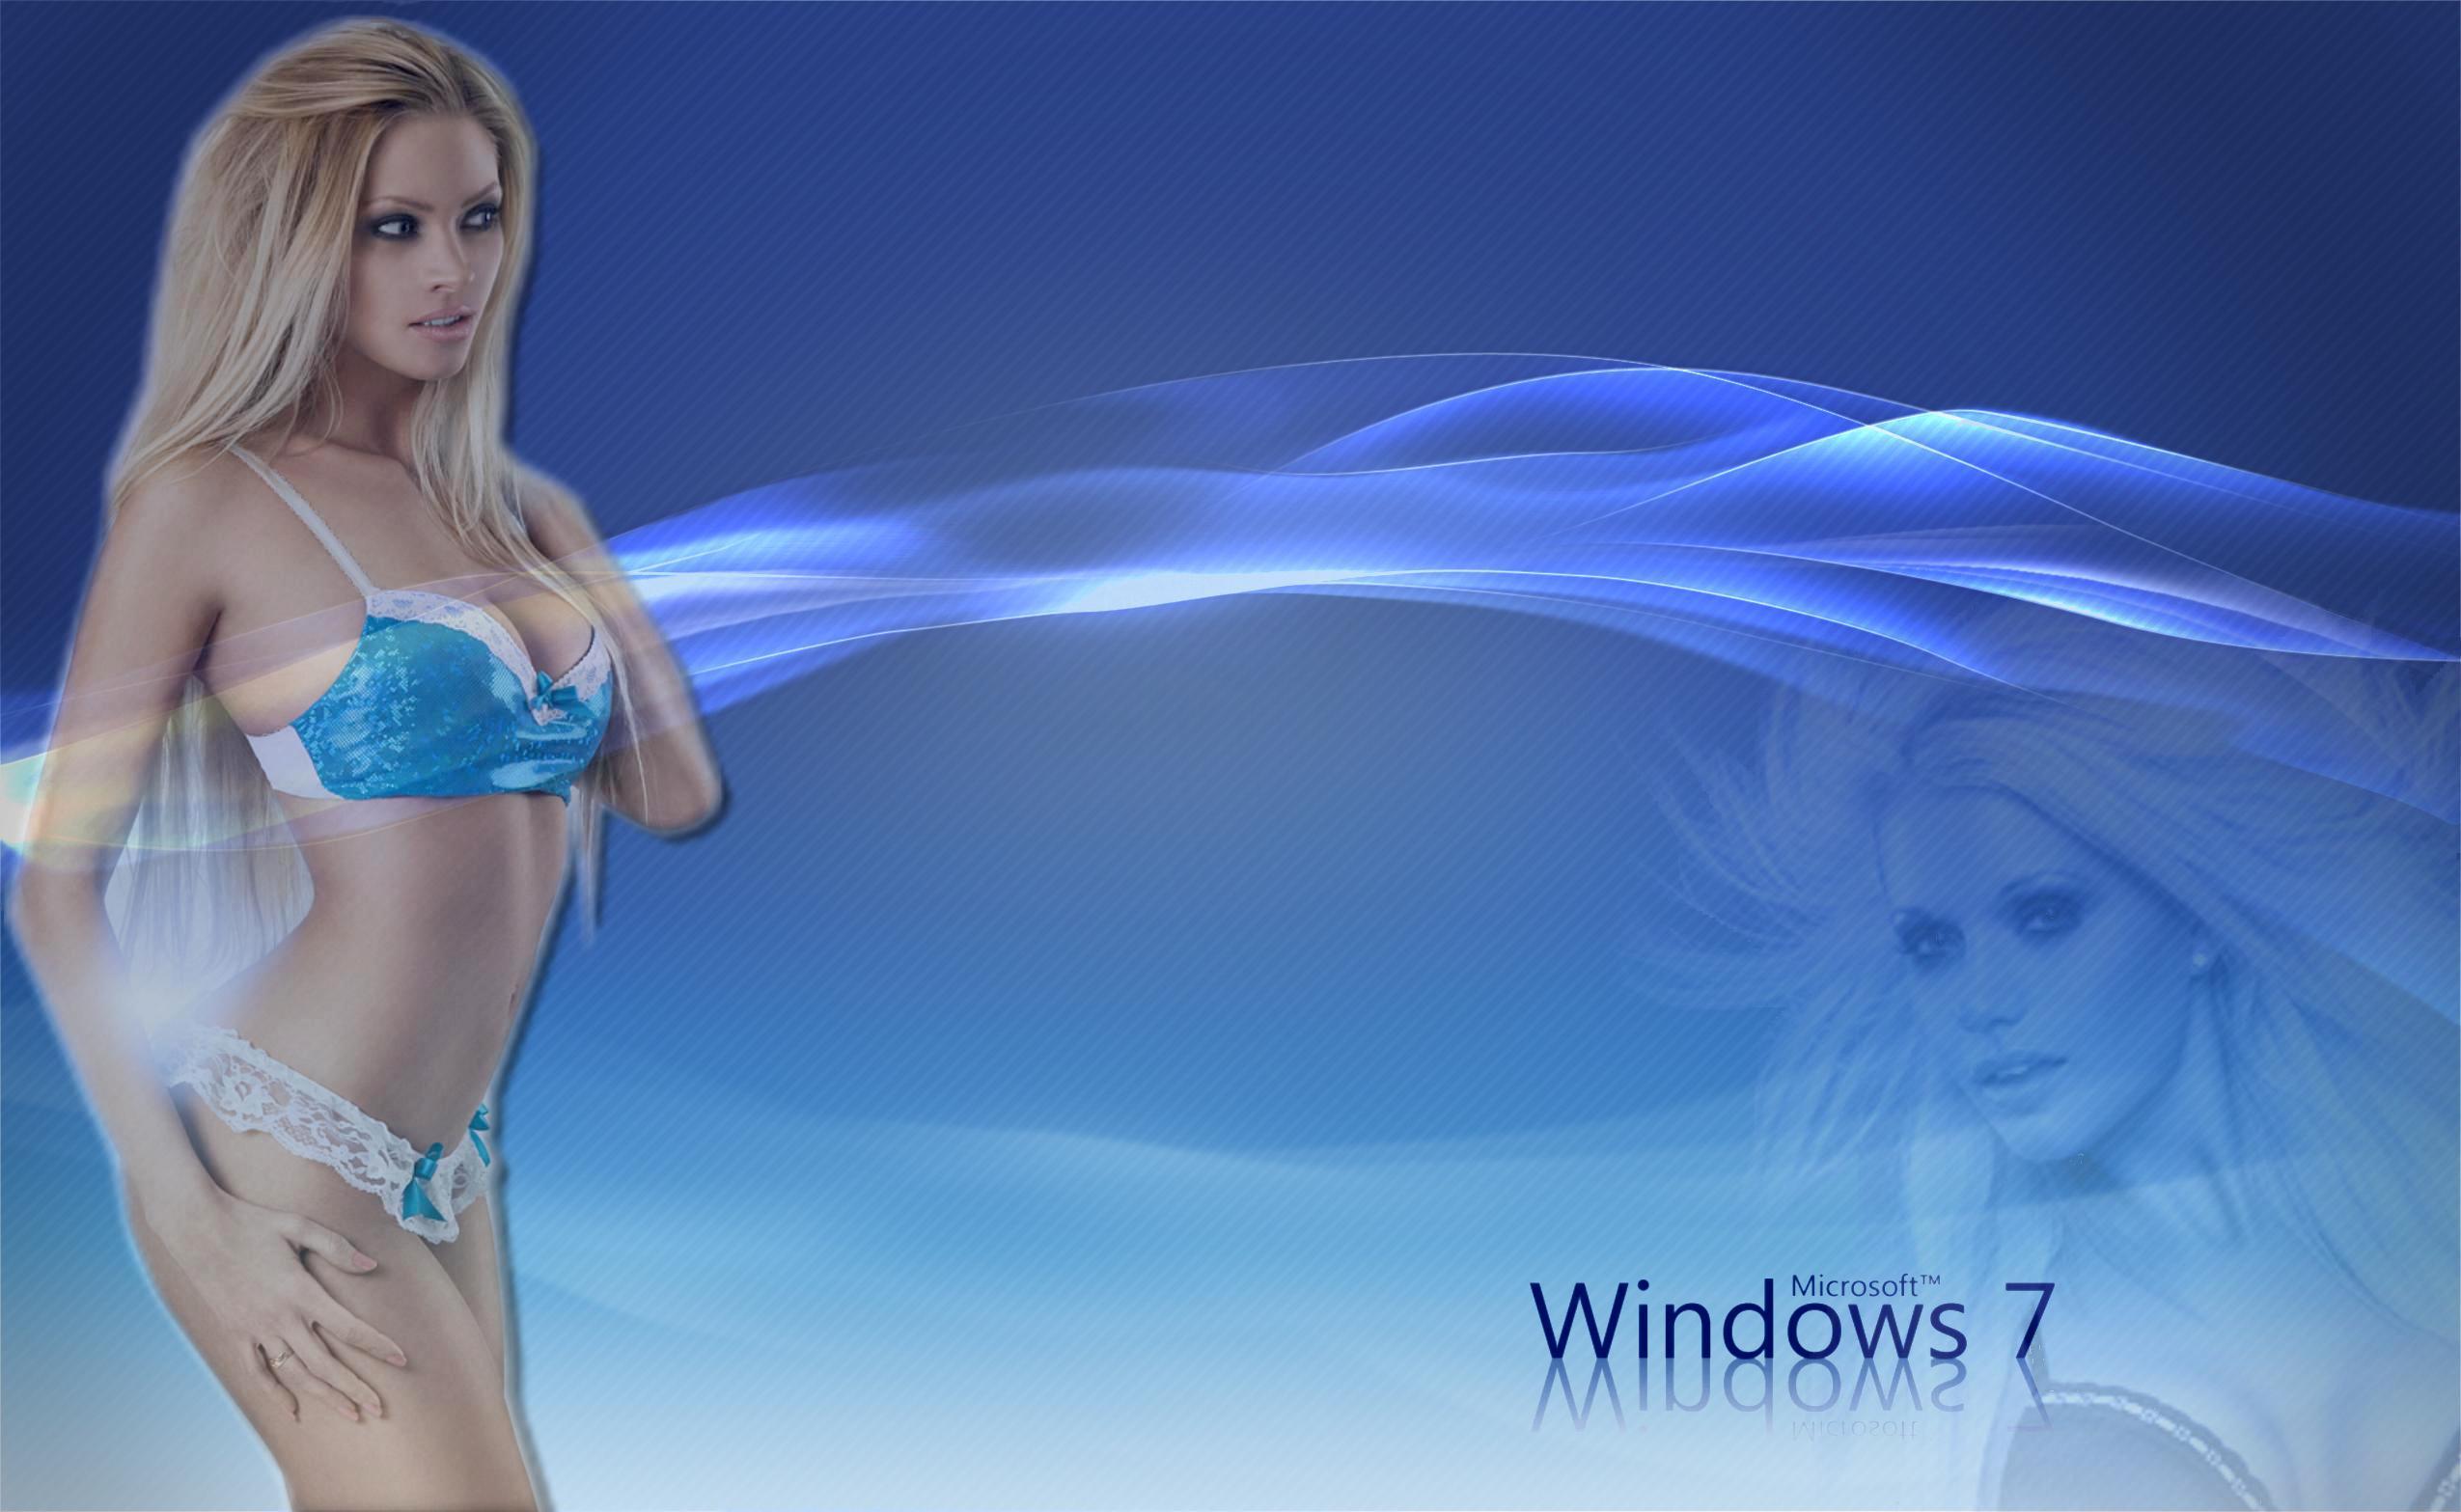 Girl windows 7 by DAMI76 on DeviantArt